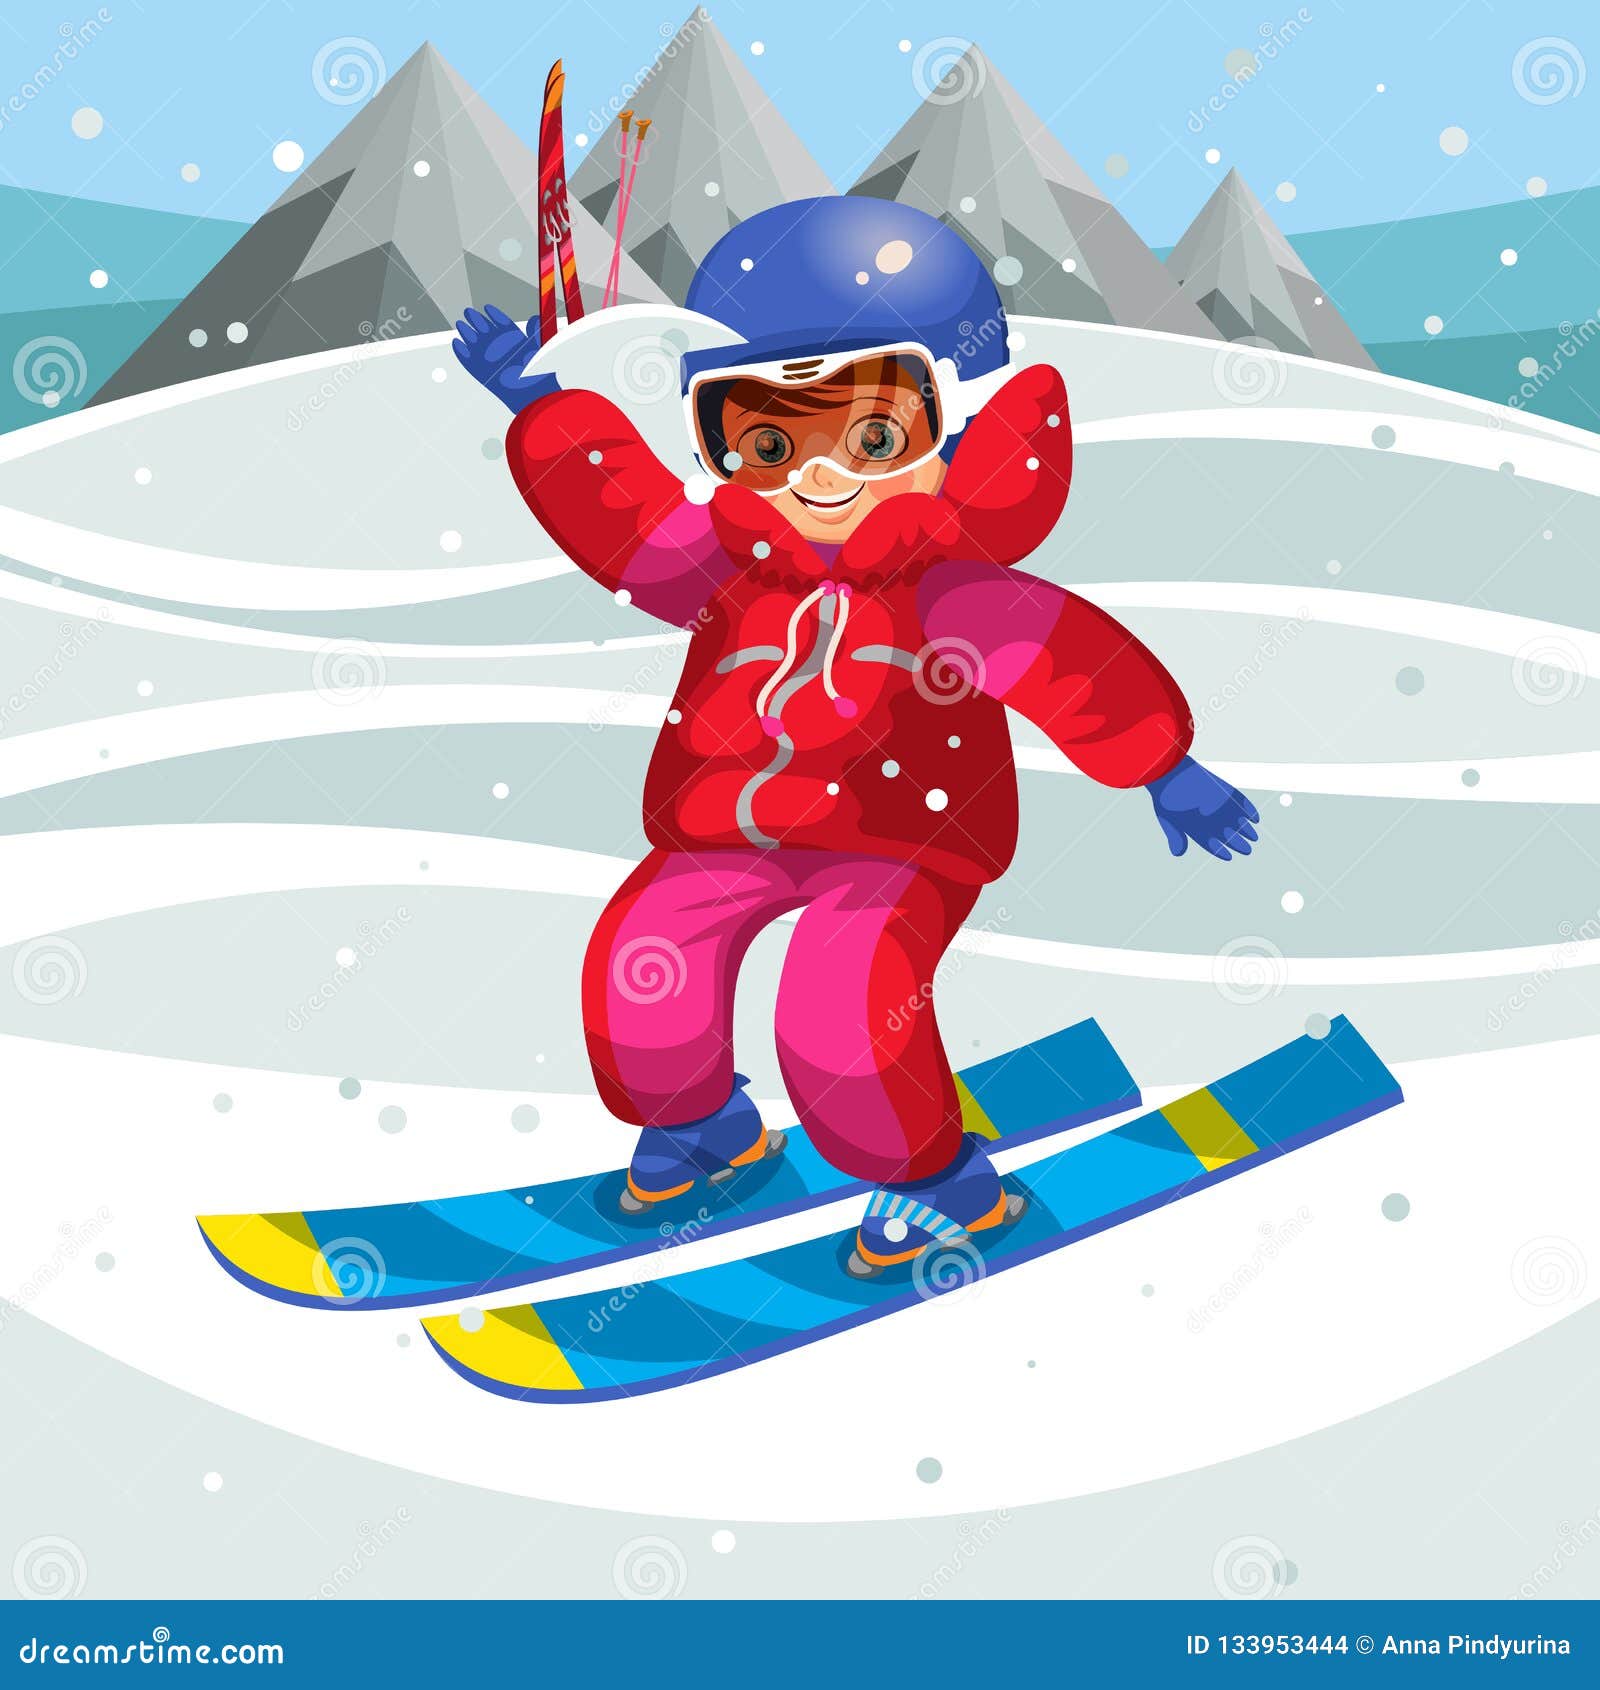 Cartoon Happy Kid Learning How To Ski on Holiday Stock Vector ...